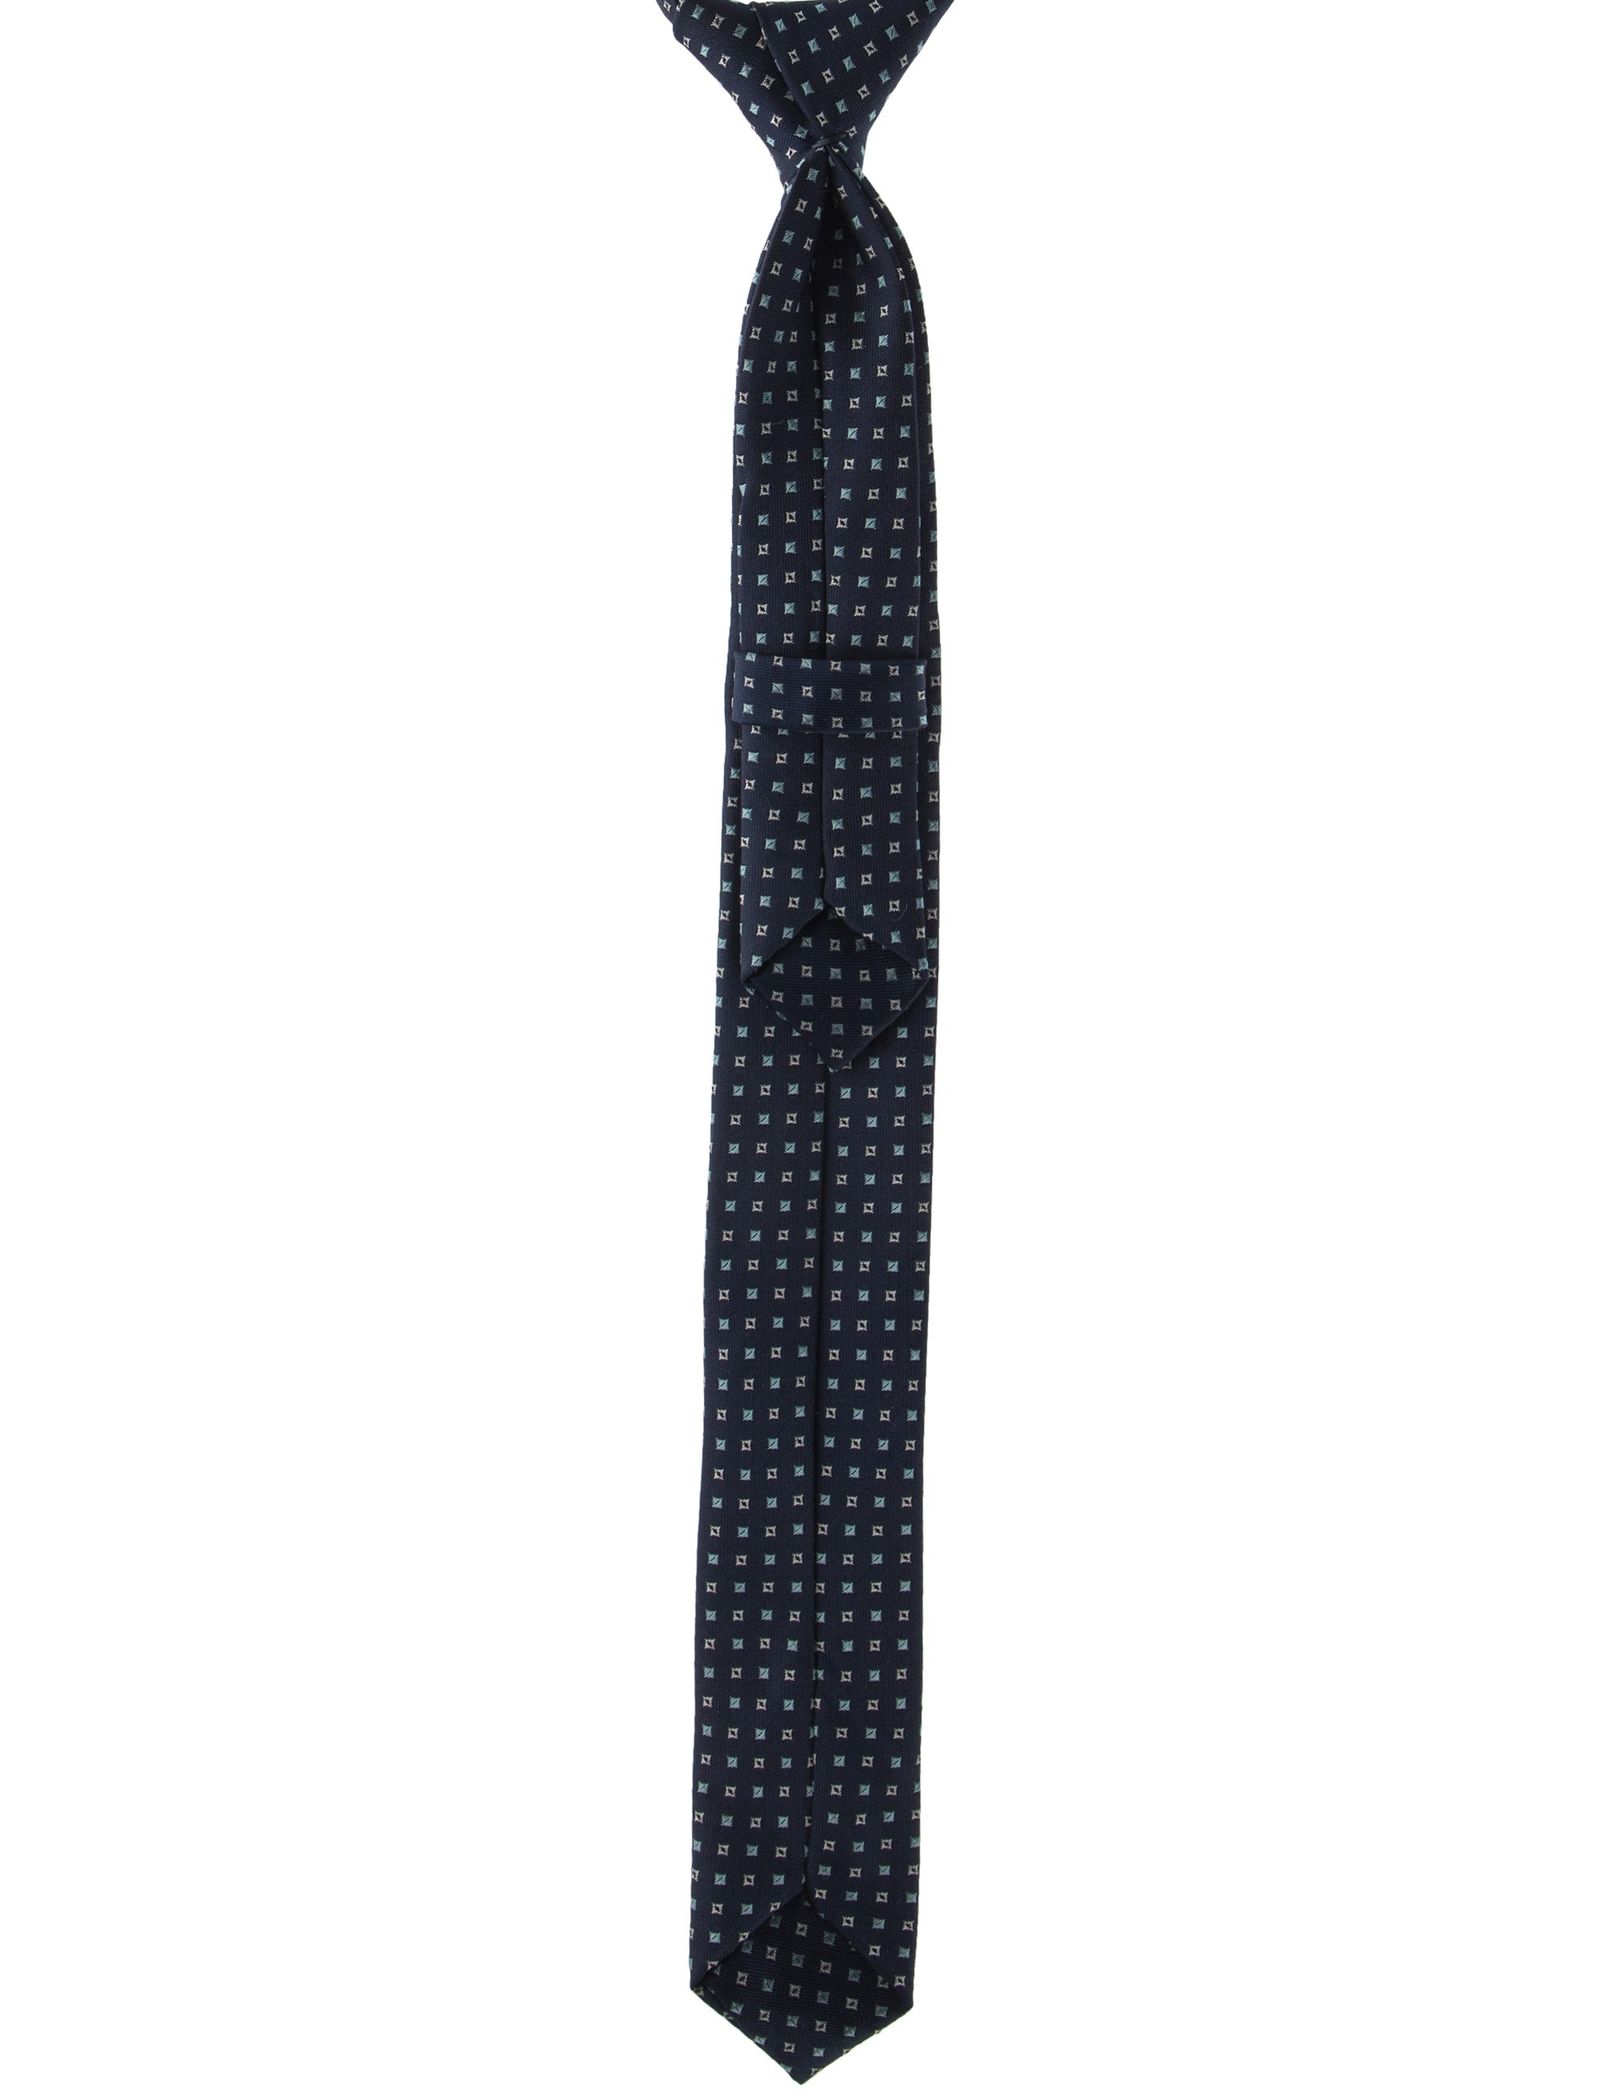 کراوات طرح دار پسرانه - بلوکیدز تک سایز - آبي - 3